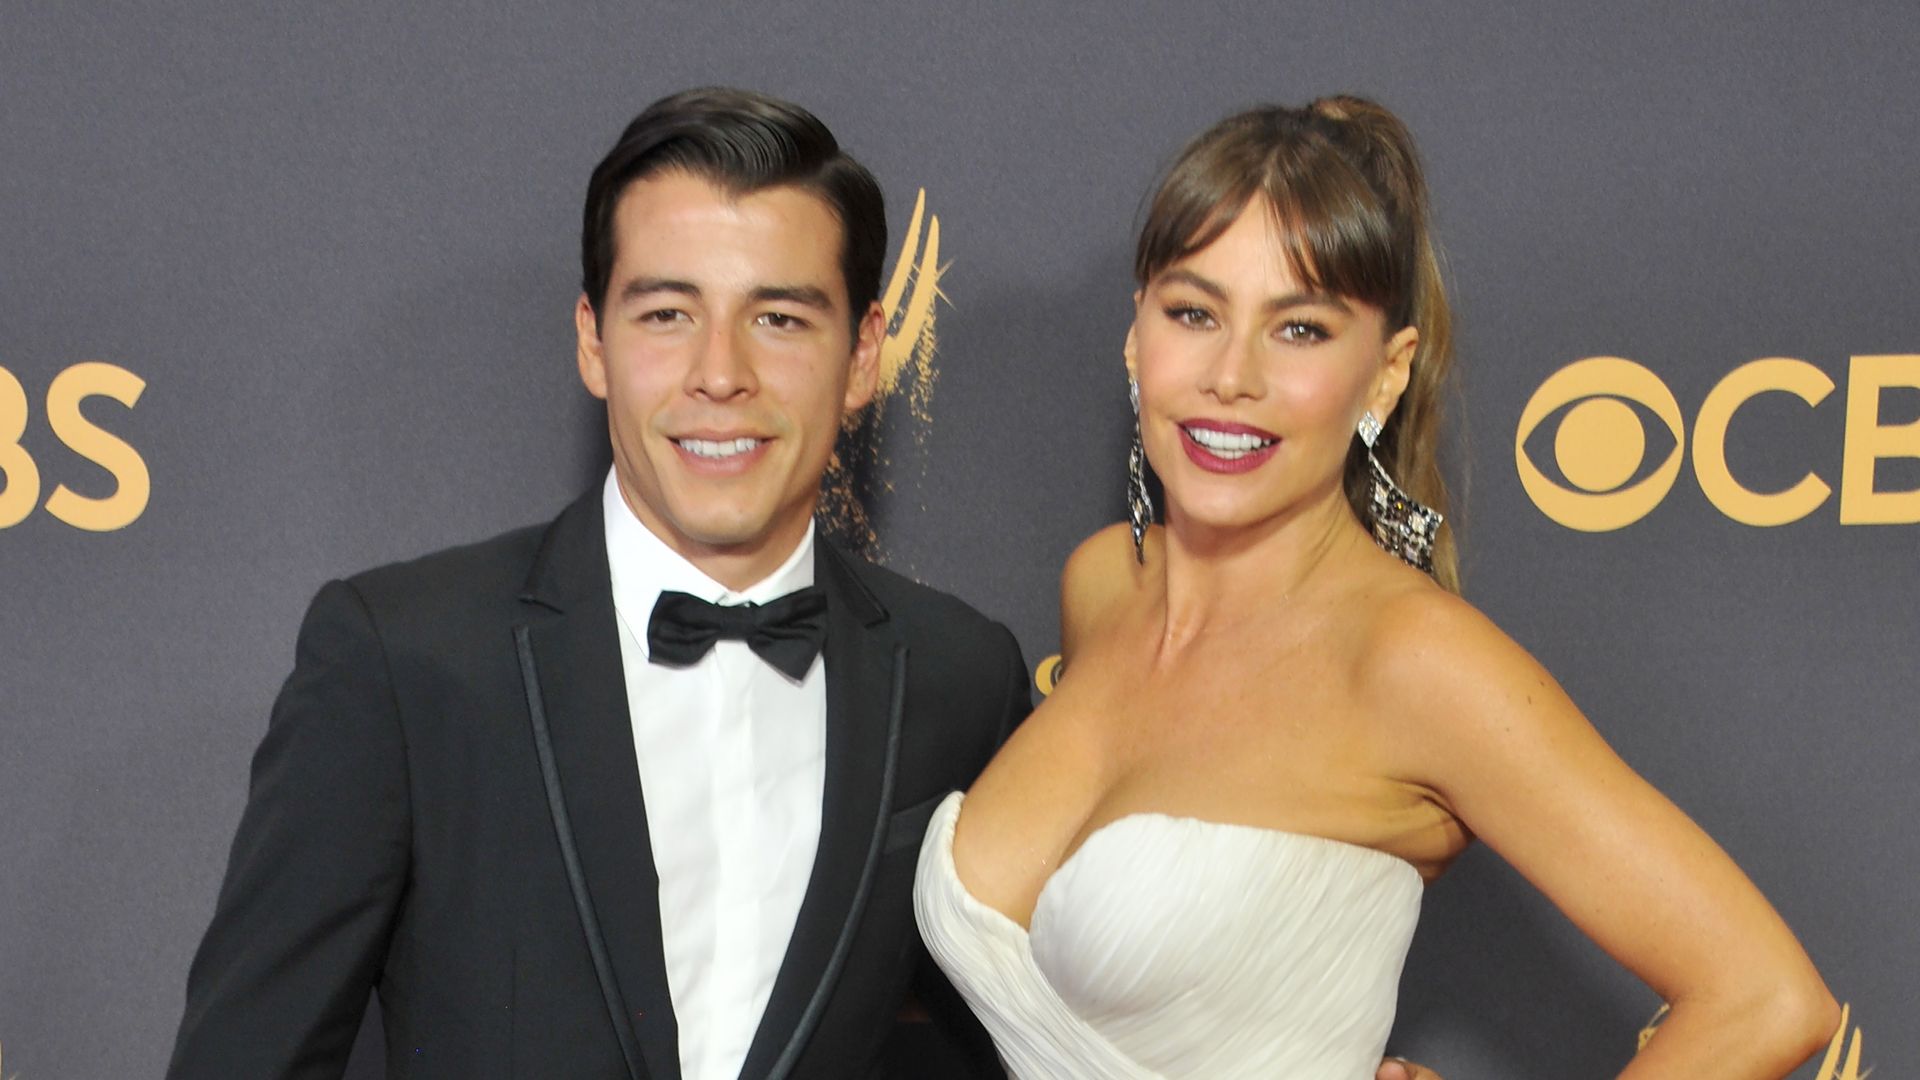 Sofia Vergara and son Manolo Gonzalez-Ripoll Vergara arrive at the 69th Annual Primetime Emmy Awards